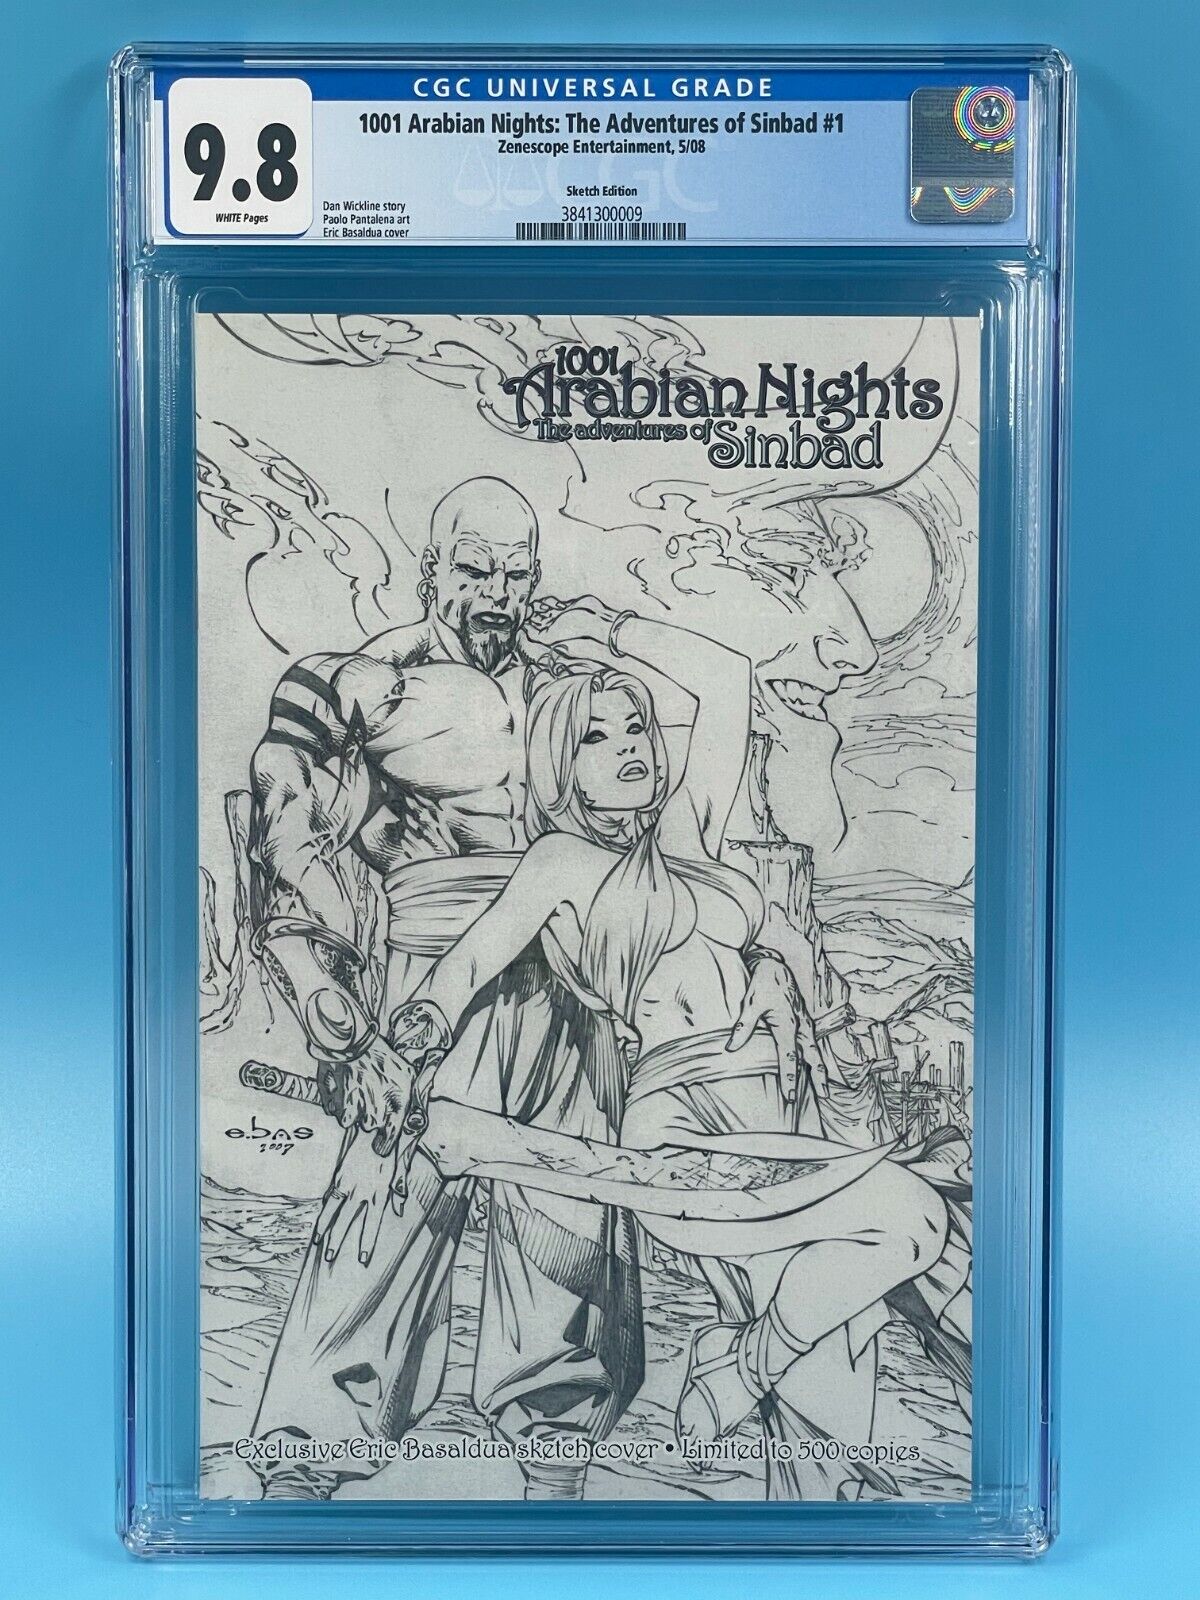 1001 Arabian Nights: The Adventures of Sinbad #1 CGC 9.8 2008 Only 500 copies